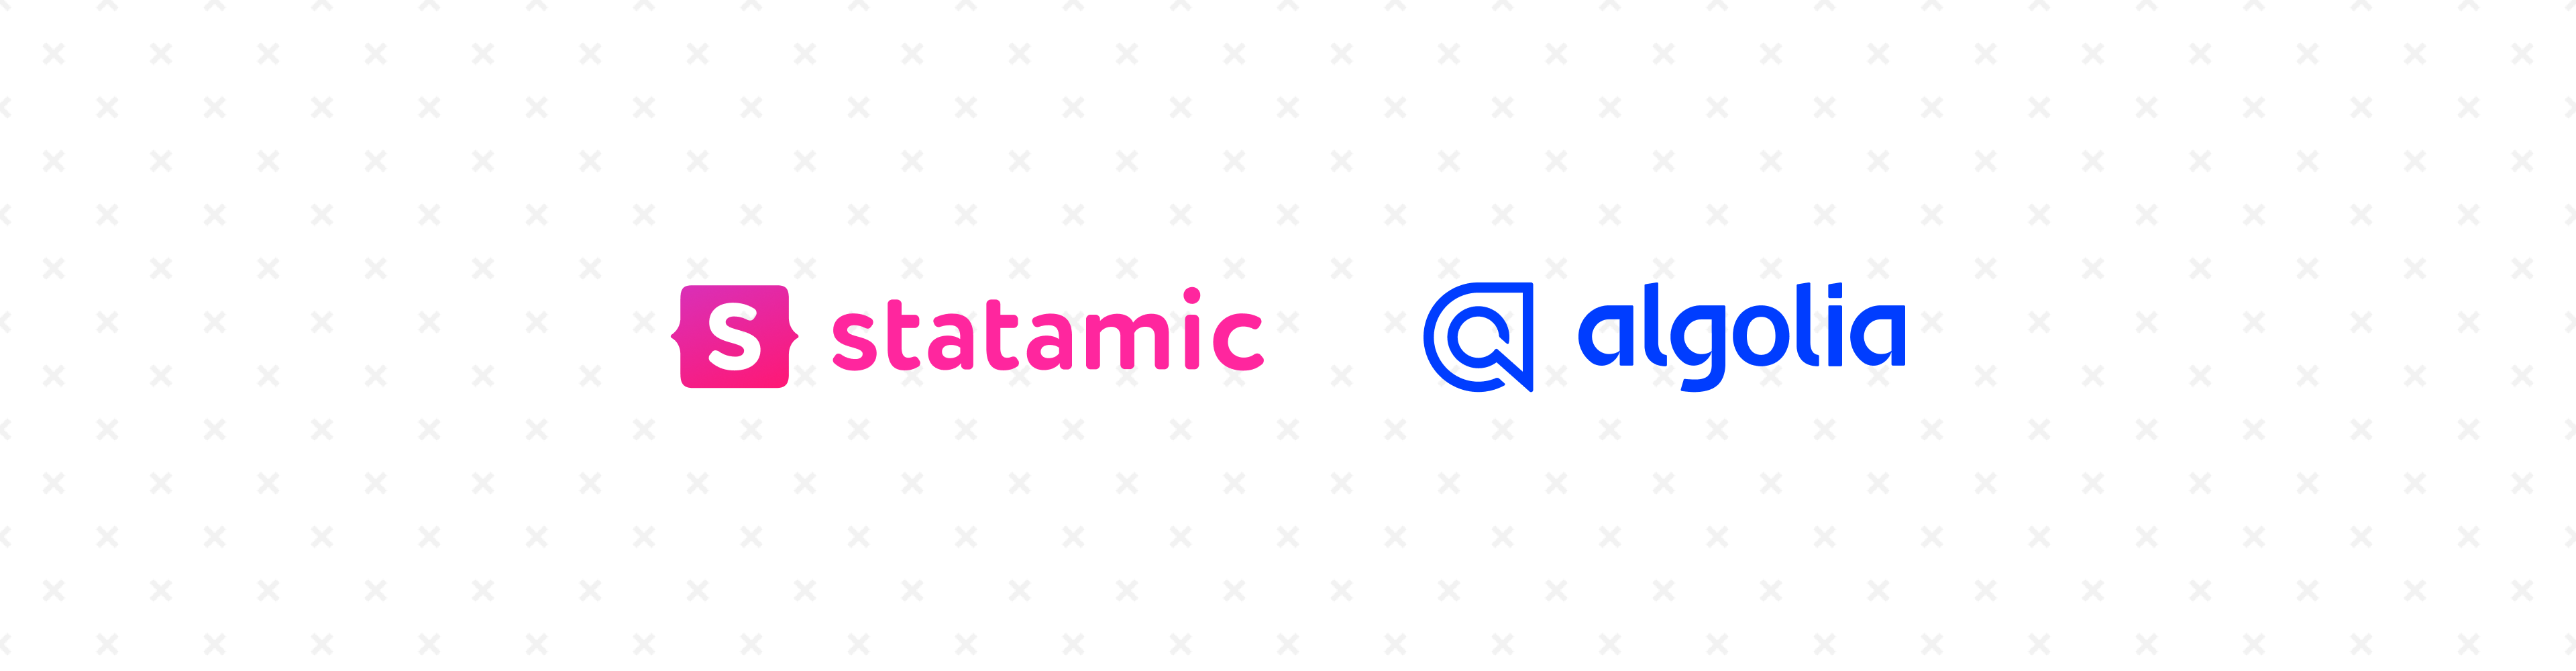 Statamic and Algolia logos